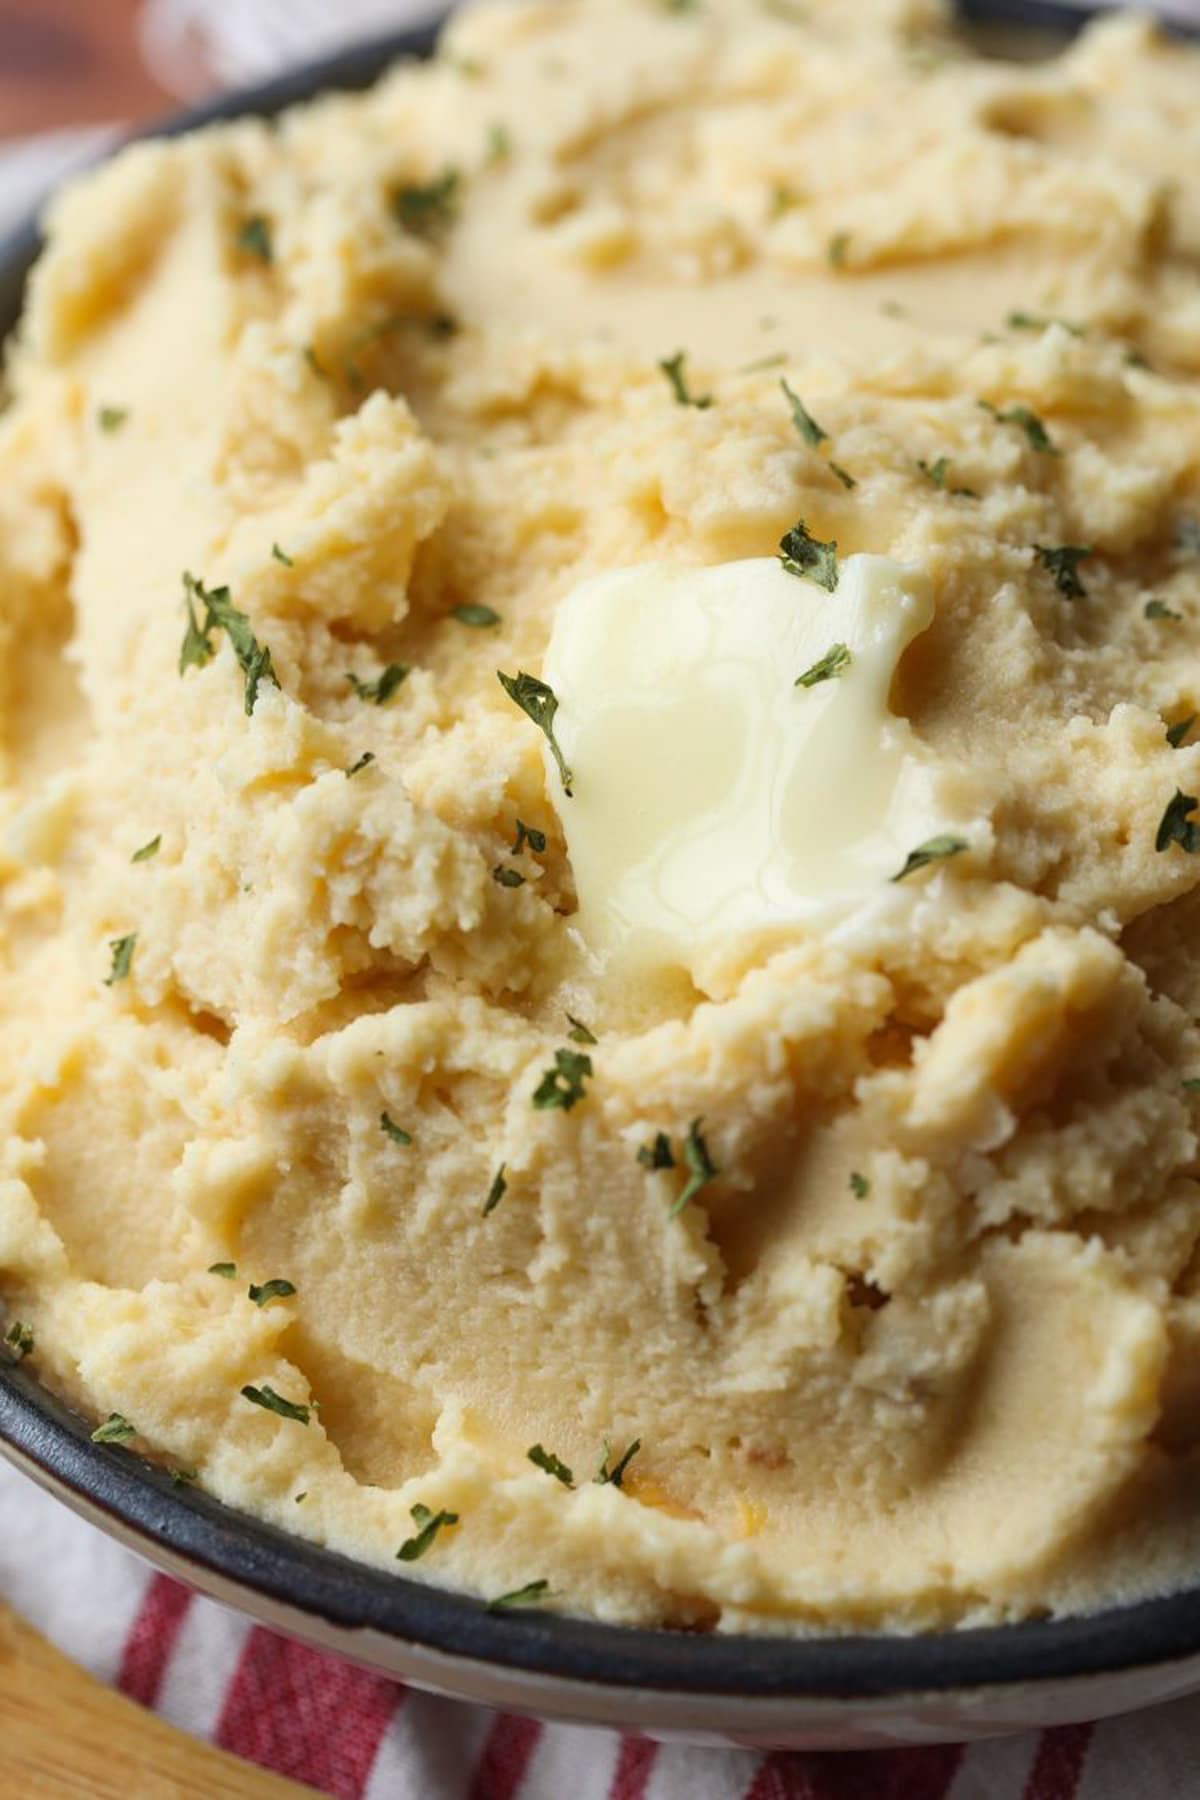 Super creamy mashed potatoes